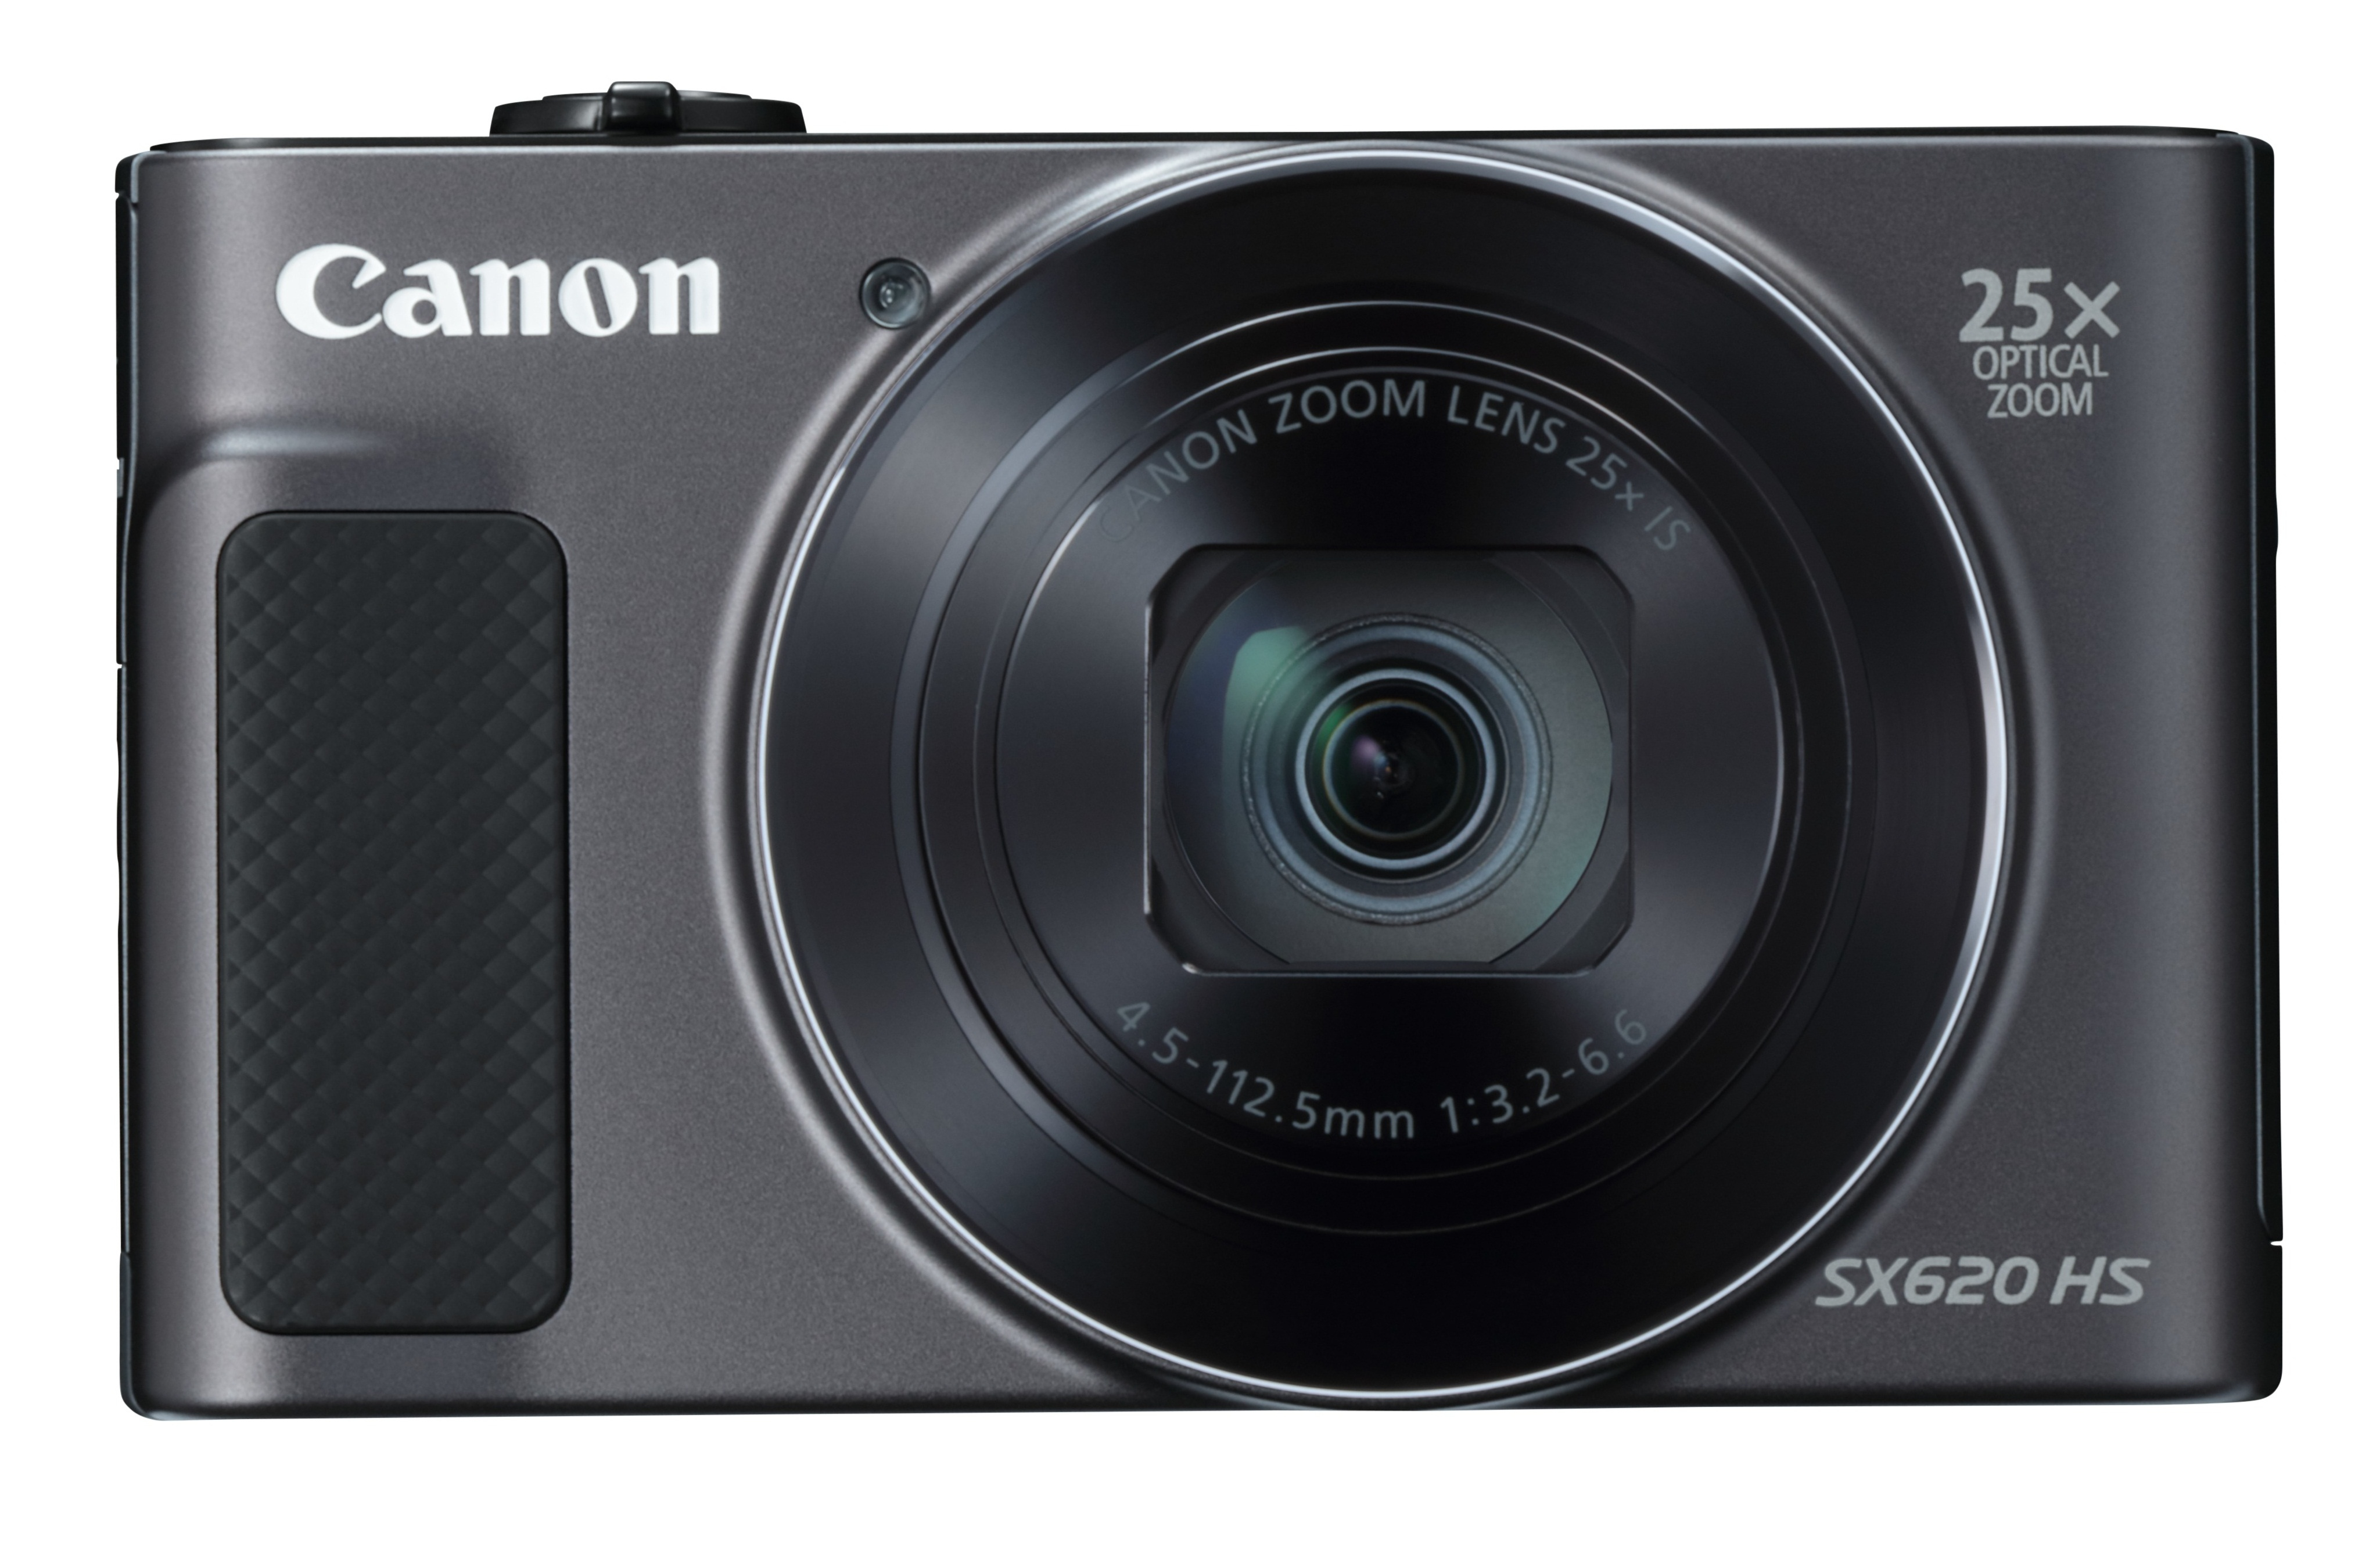 Canon PowerShot SX620 HS - Digital camera - compact - 20.2 MP - 1080p / 30 fps - 25x optical zoom - Wi-Fi, NFC - black